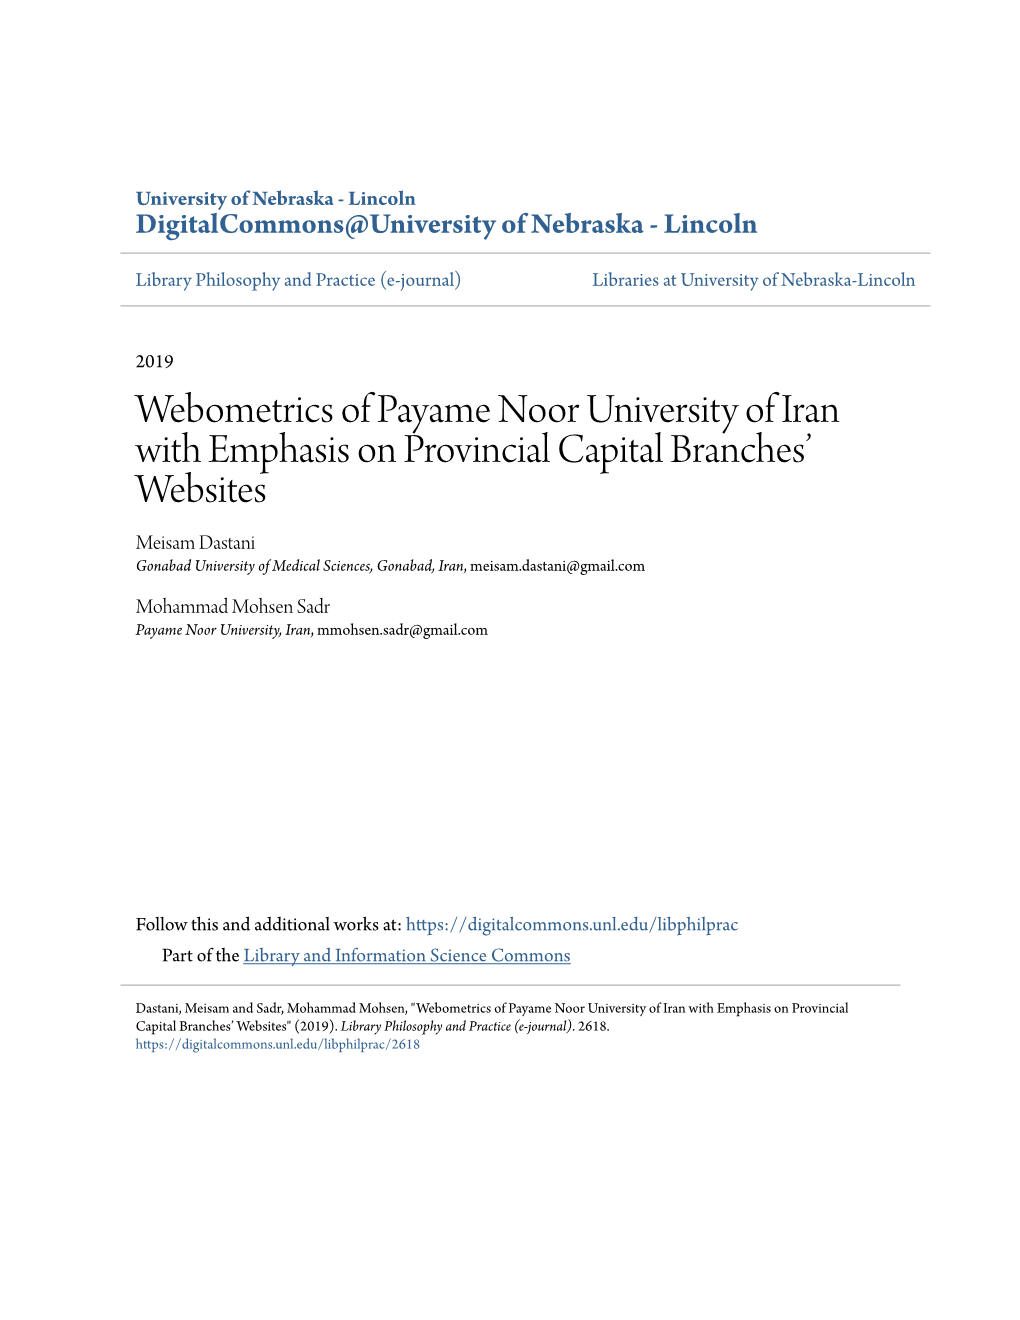 Webometrics of Payame Noor University of Iran with Emphasis On